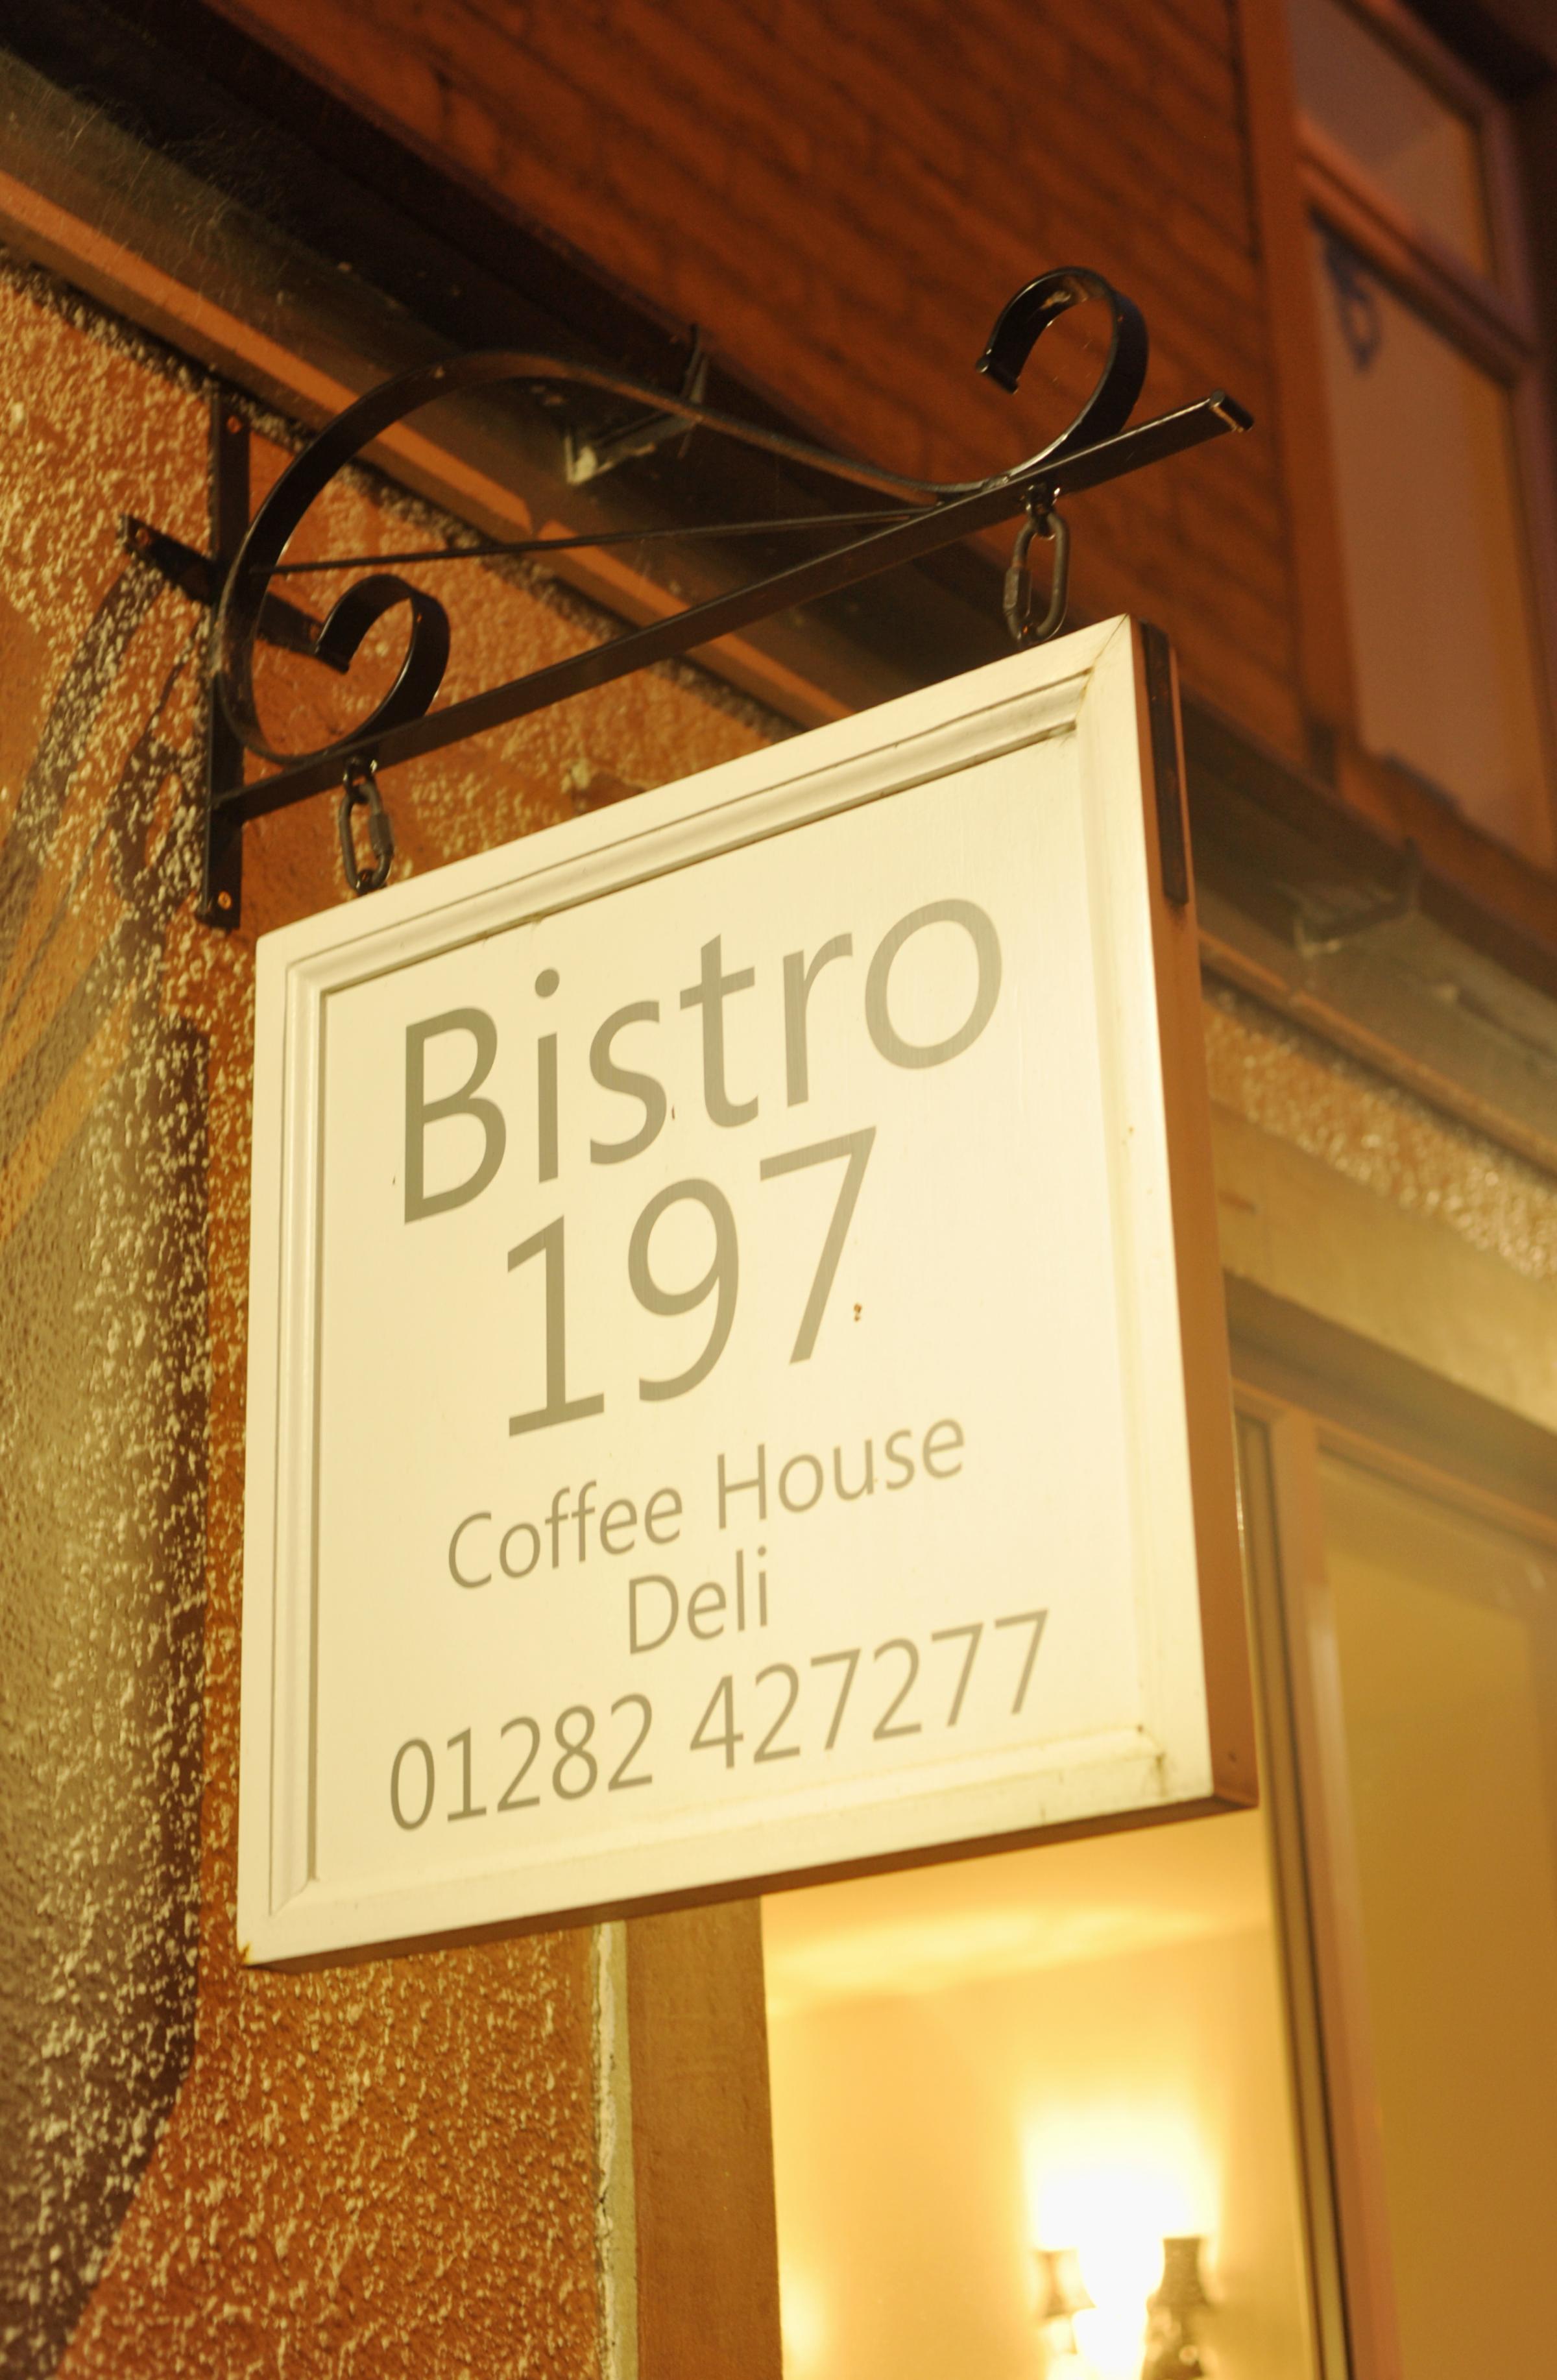 IN PICTURES: Top 20+ restaurants in Burnley according to TripAdvisor